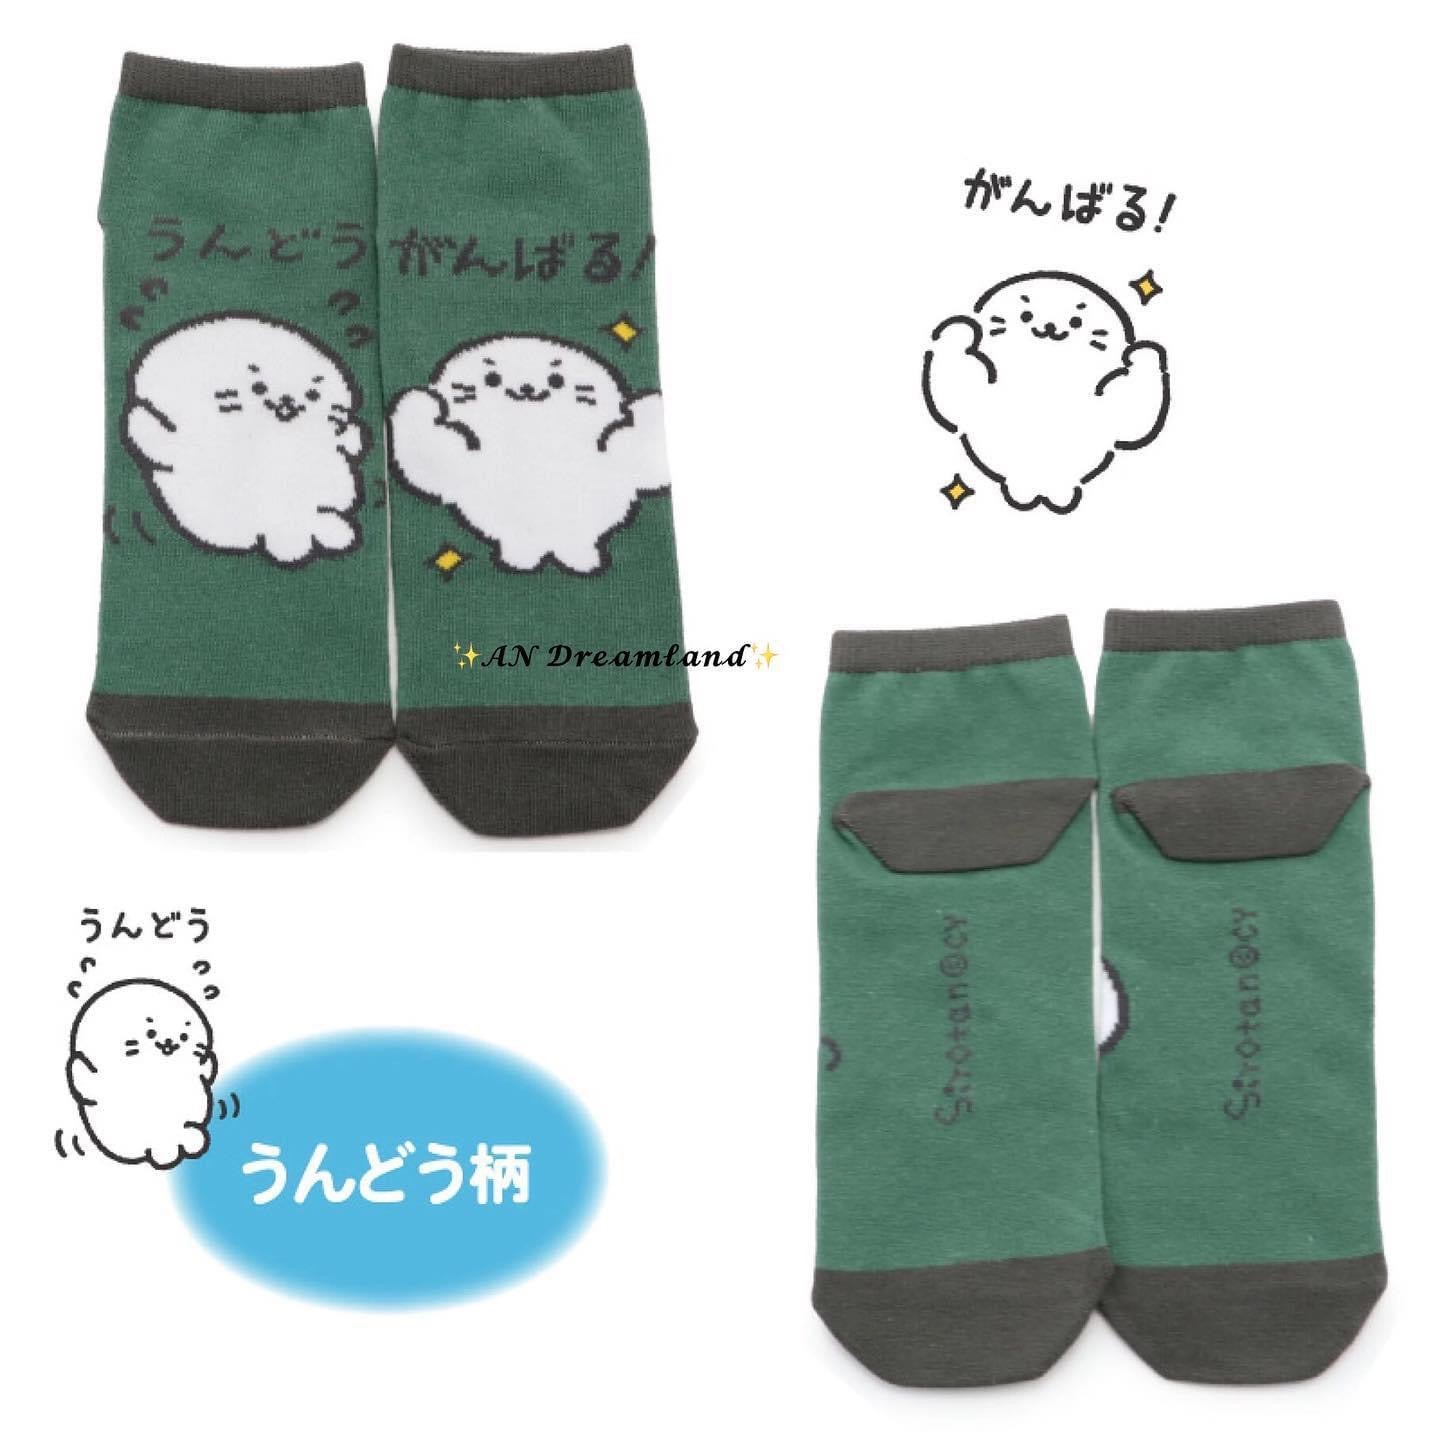 Sirotan襪 1套3對套裝筋斗雲/ 肌肉鍛鍊/ Sirotan與Rakkoinu